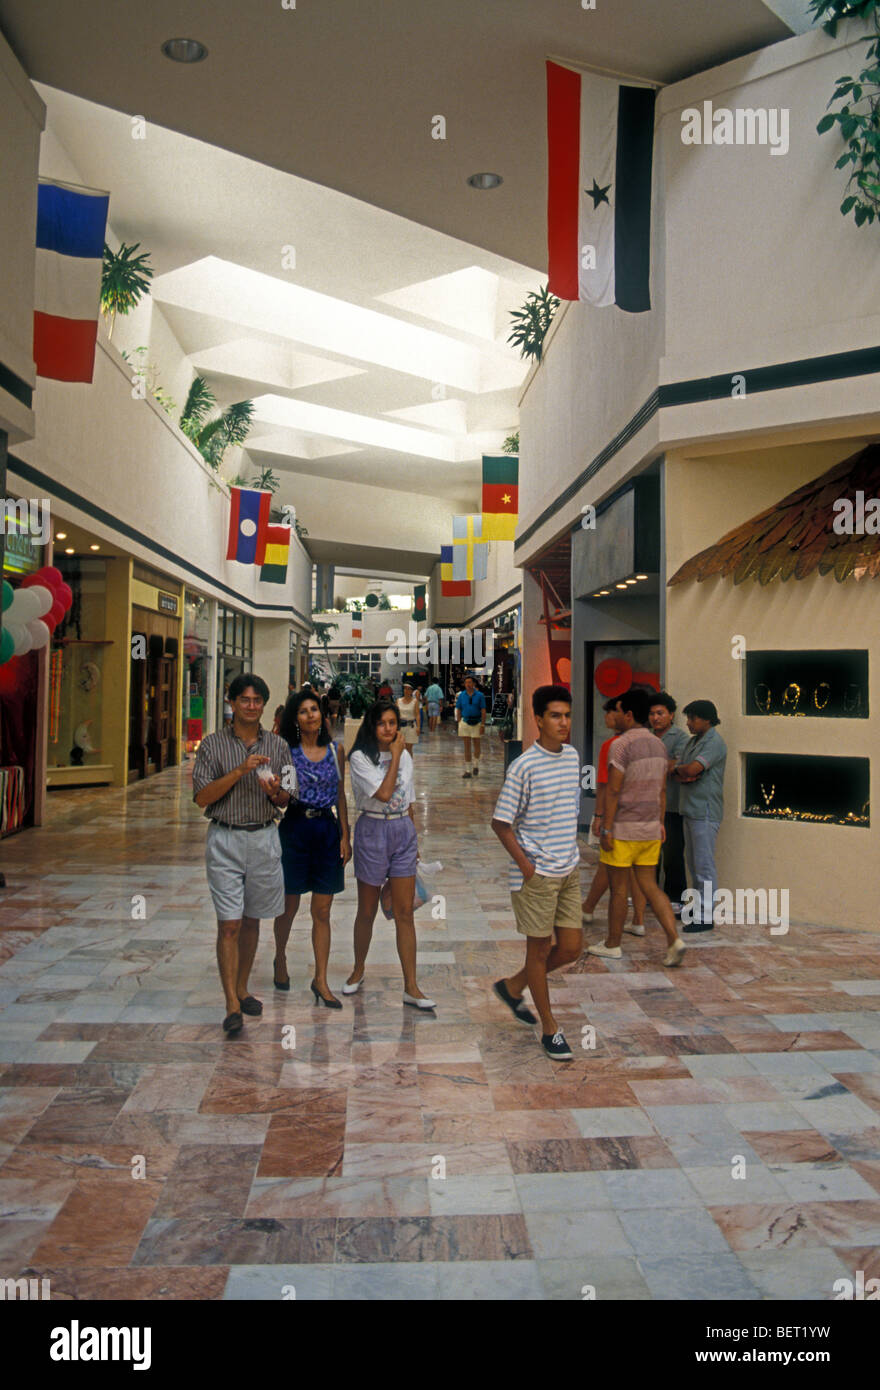 Mexican people, shoppers, Plaza Flamingo shopping mall, Plaza Flamingo,  shopping mall, Cancun, Quintana Roo State, Yucatan Peninsula, Mexico Stock  Photo - Alamy